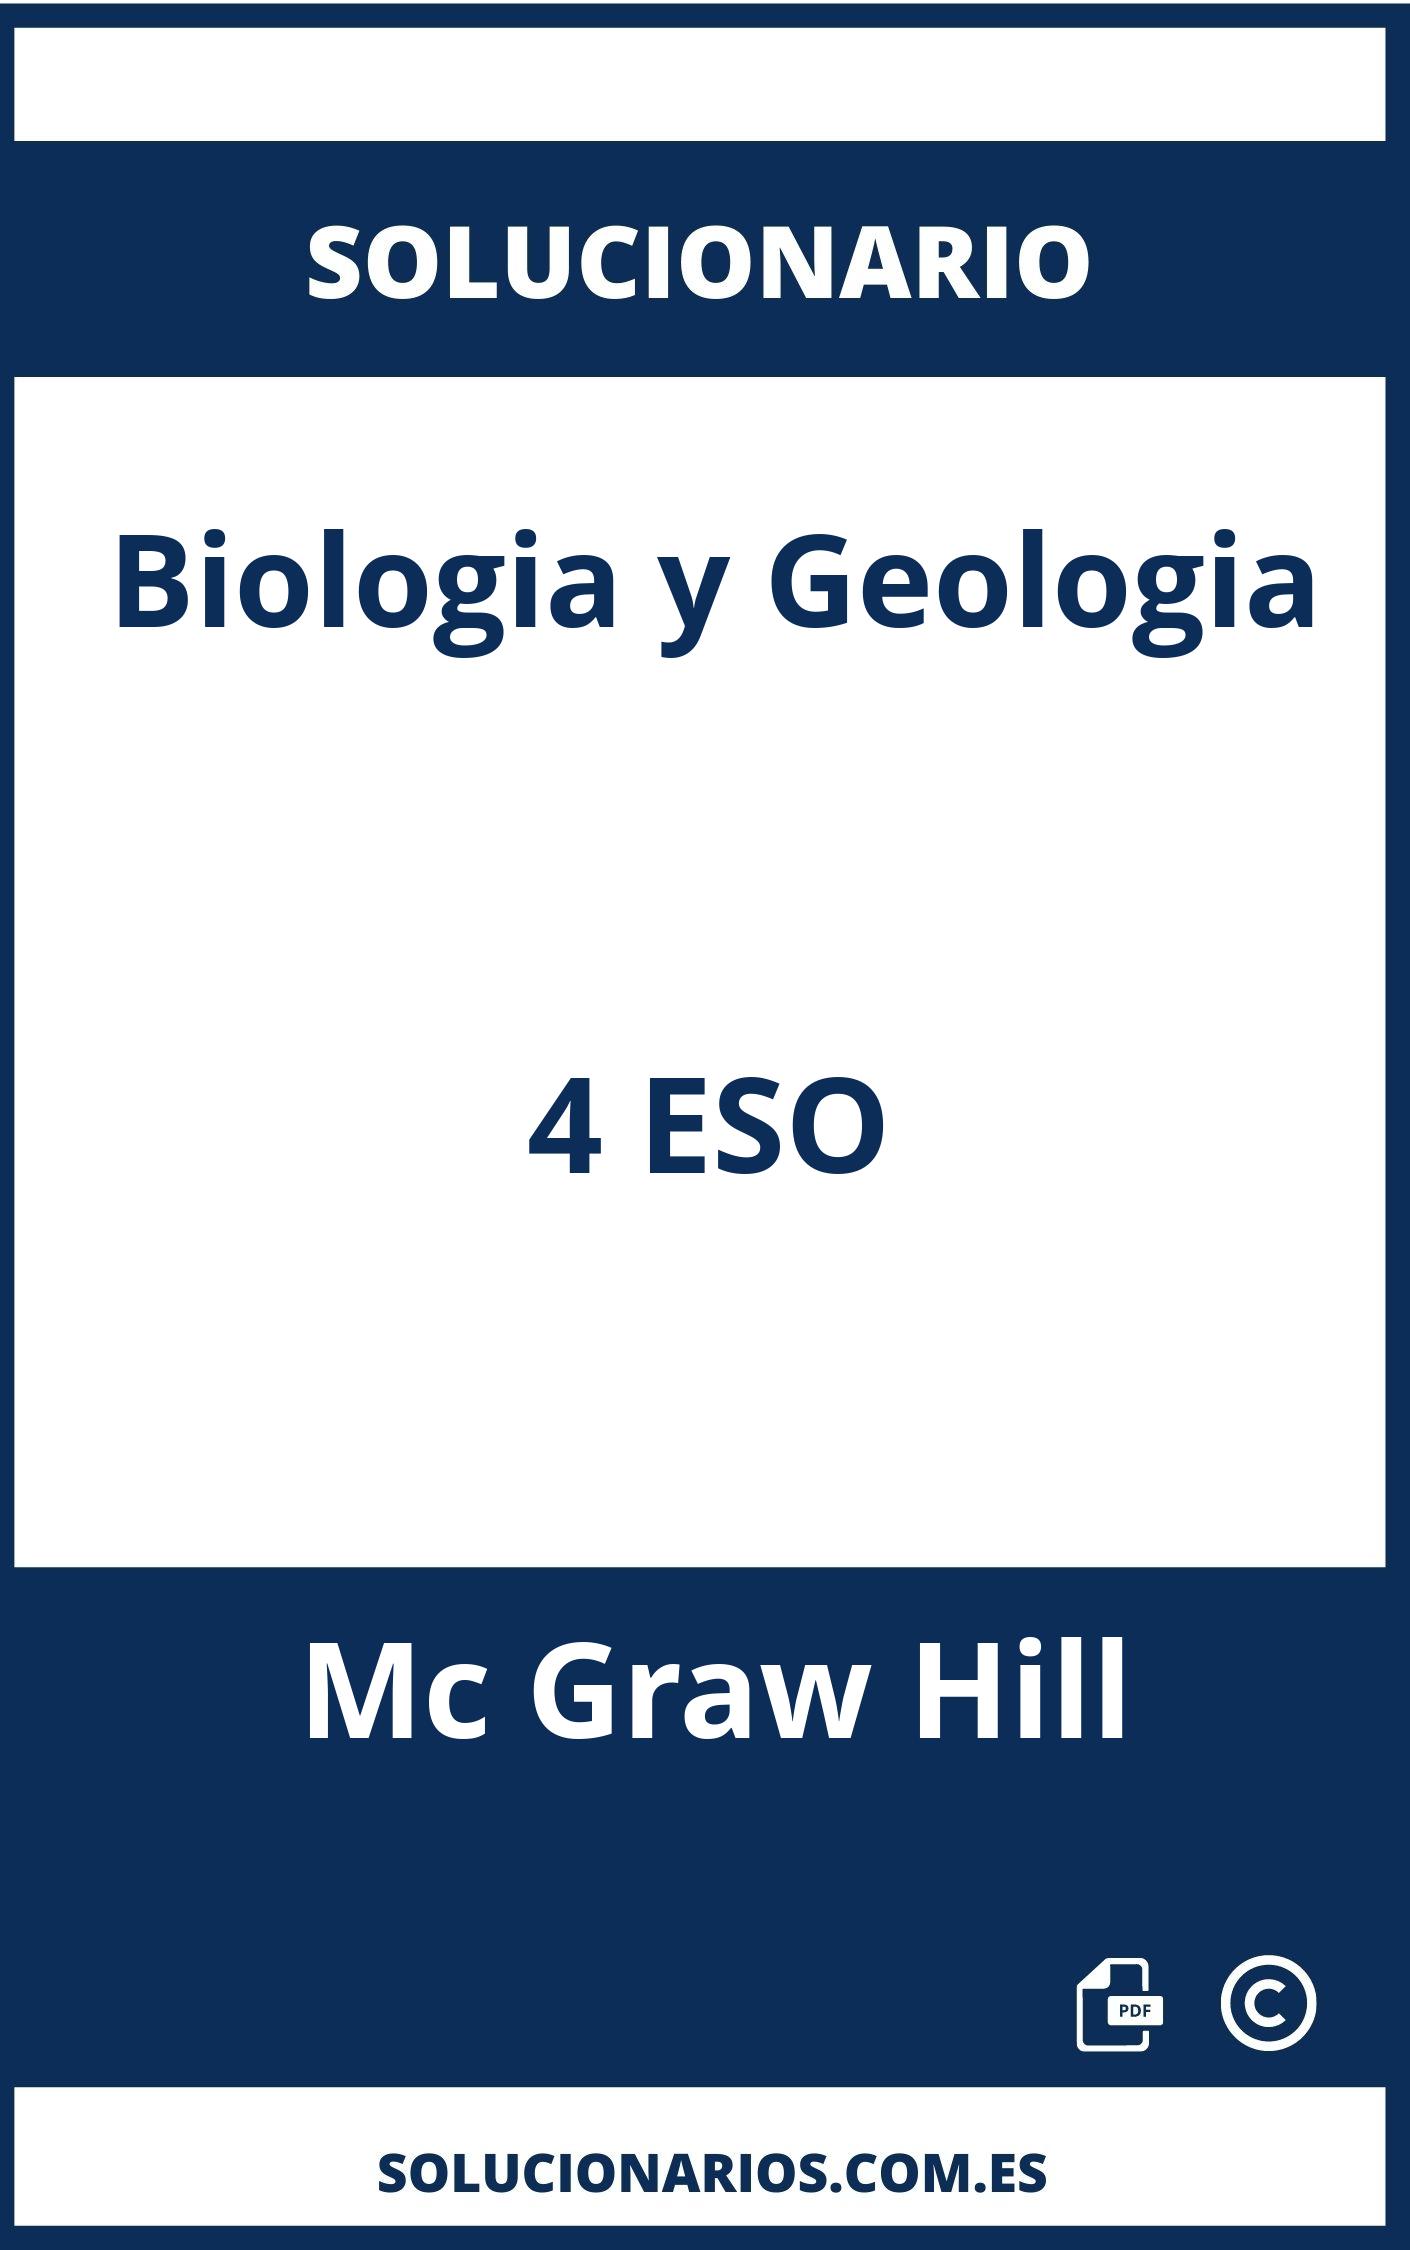 Solucionario Biologia y Geologia 4 ESO Mc Graw Hill